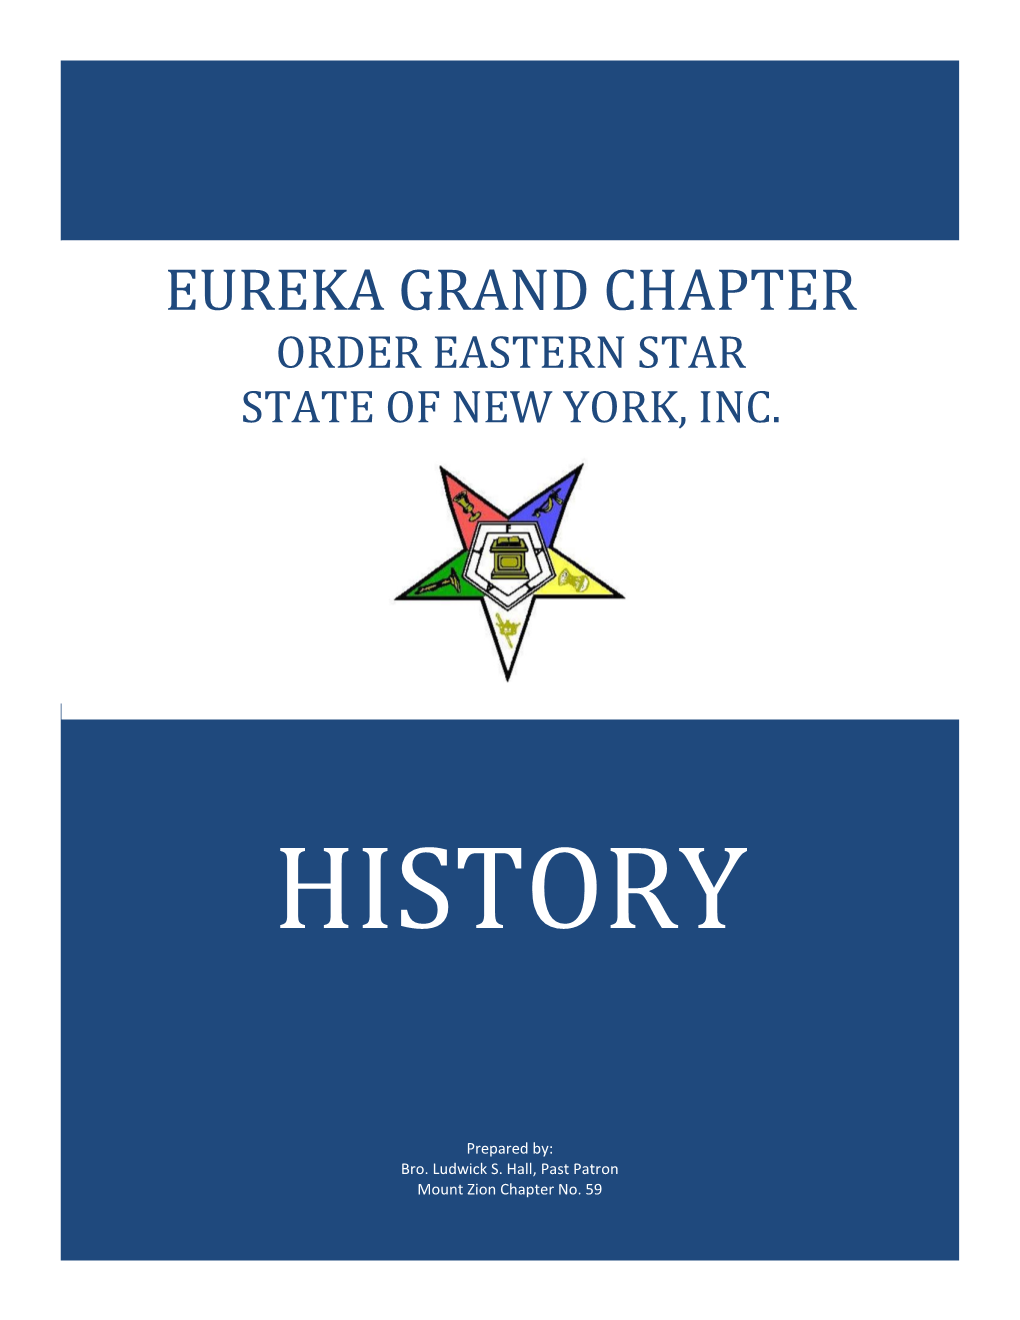 Order Eastern Star State of New York, Inc